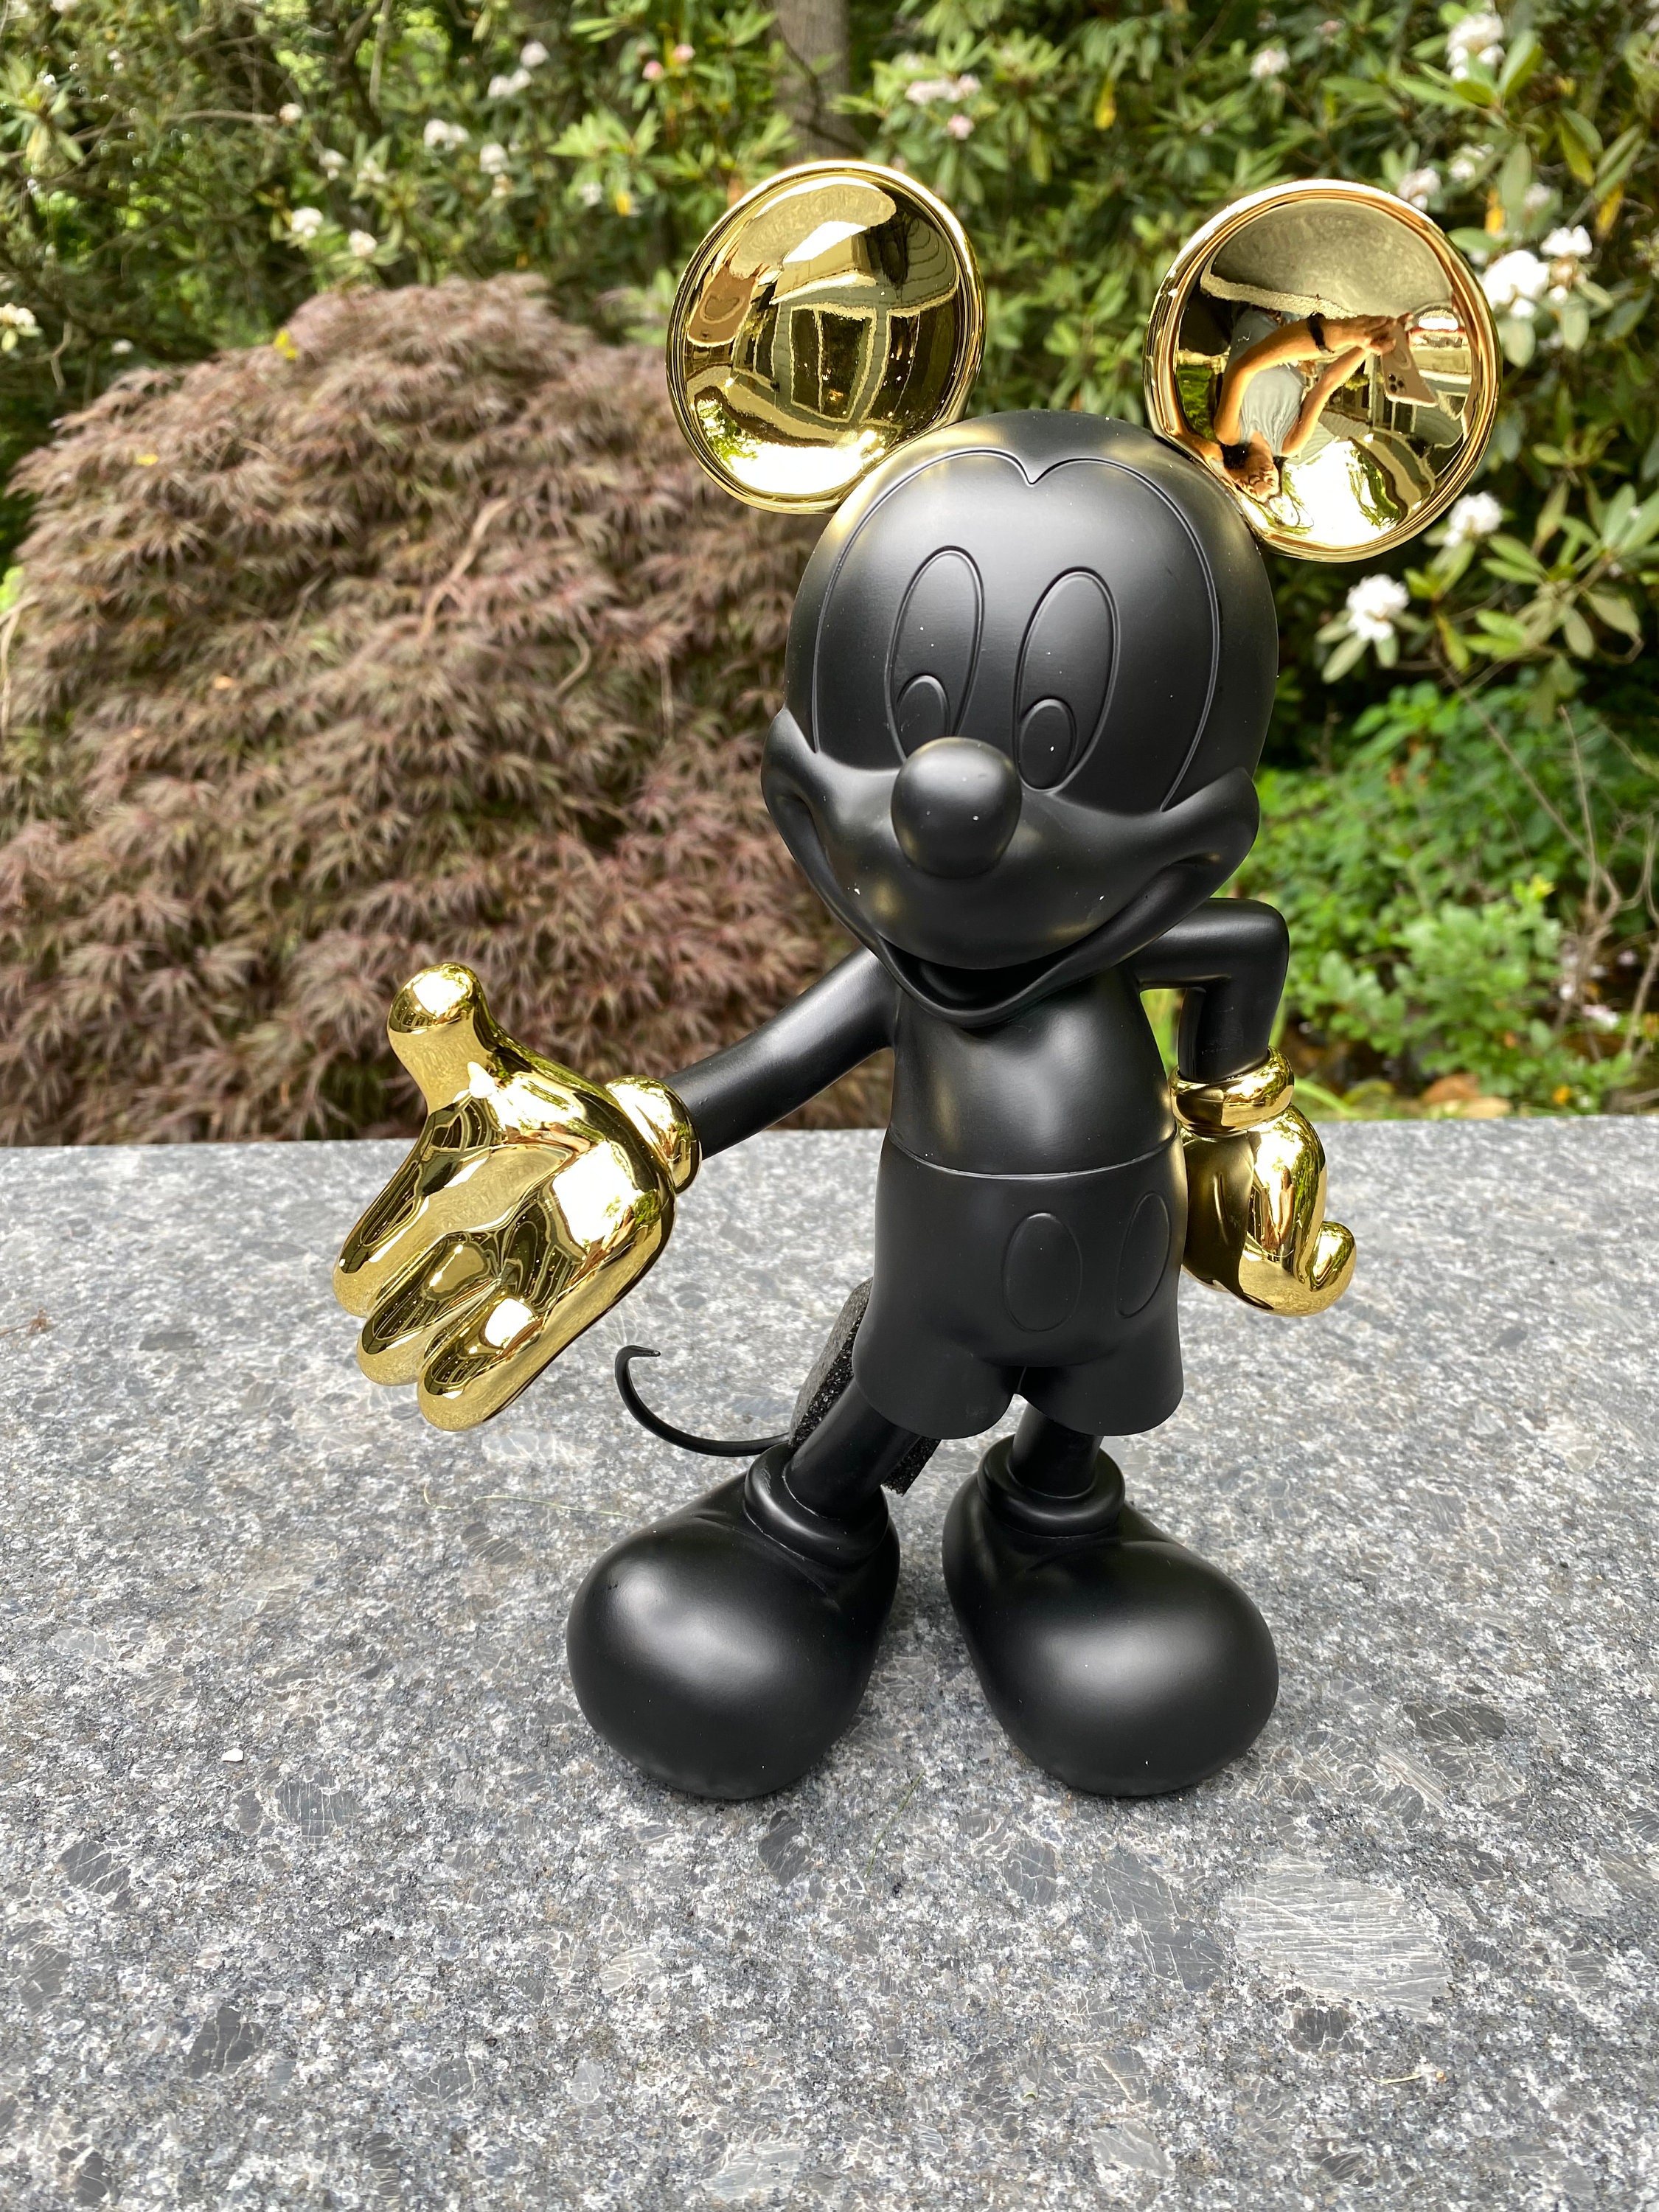 Veronderstellen Lol solo Mickey mouse statue - Etsy Nederland